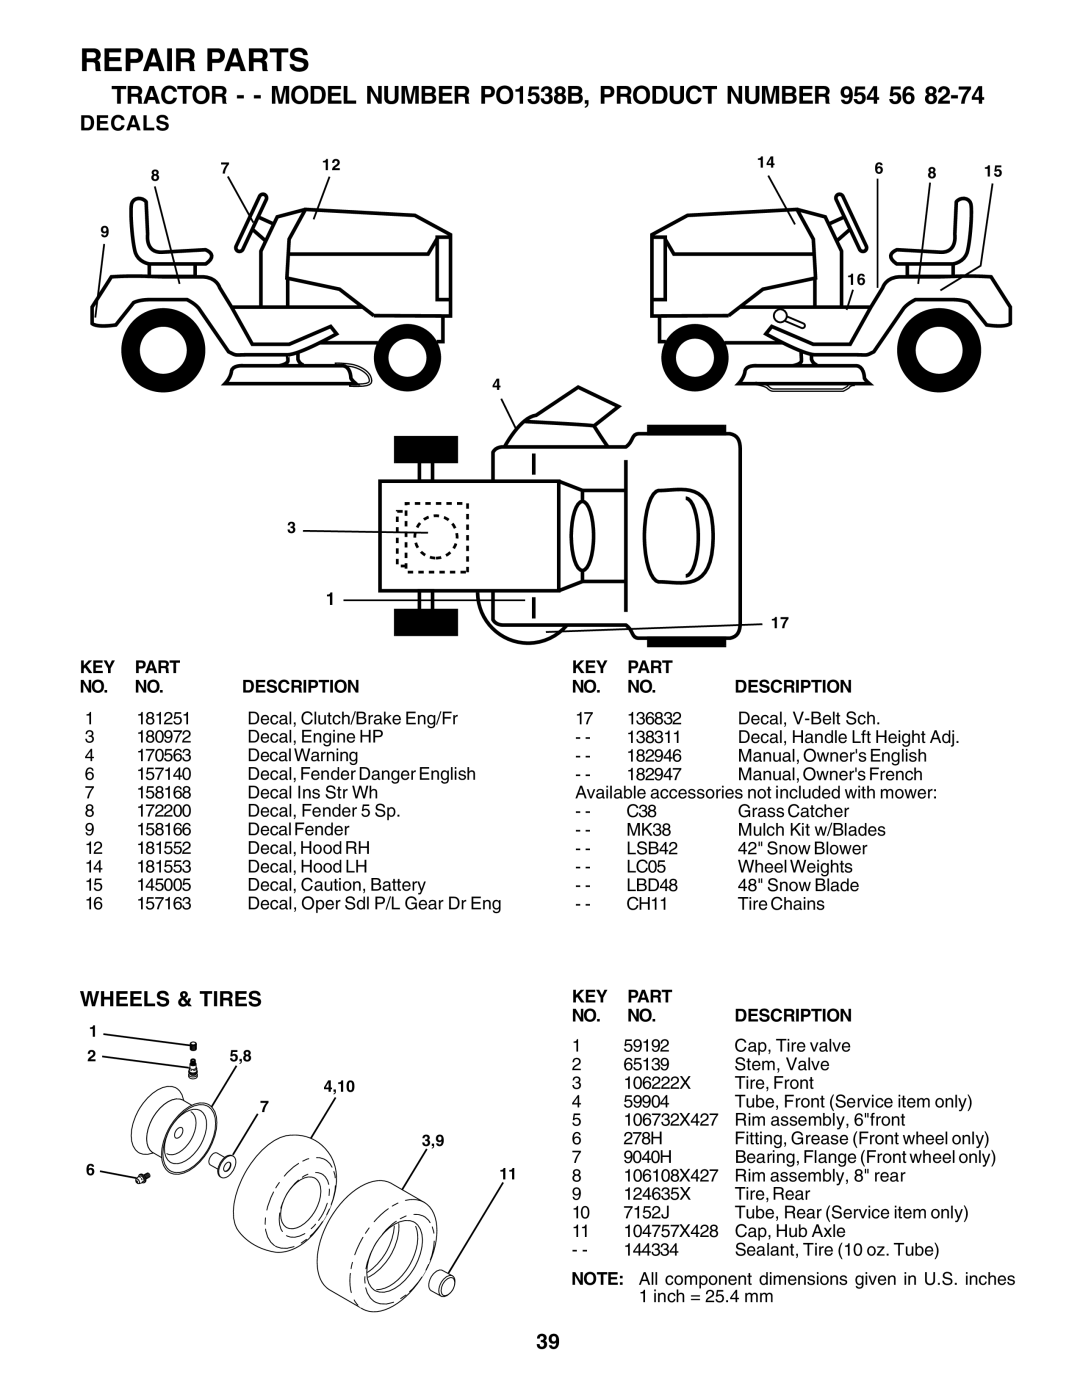 Poulan 182946 manual Decals, Wheels & Tires, Repair Parts 